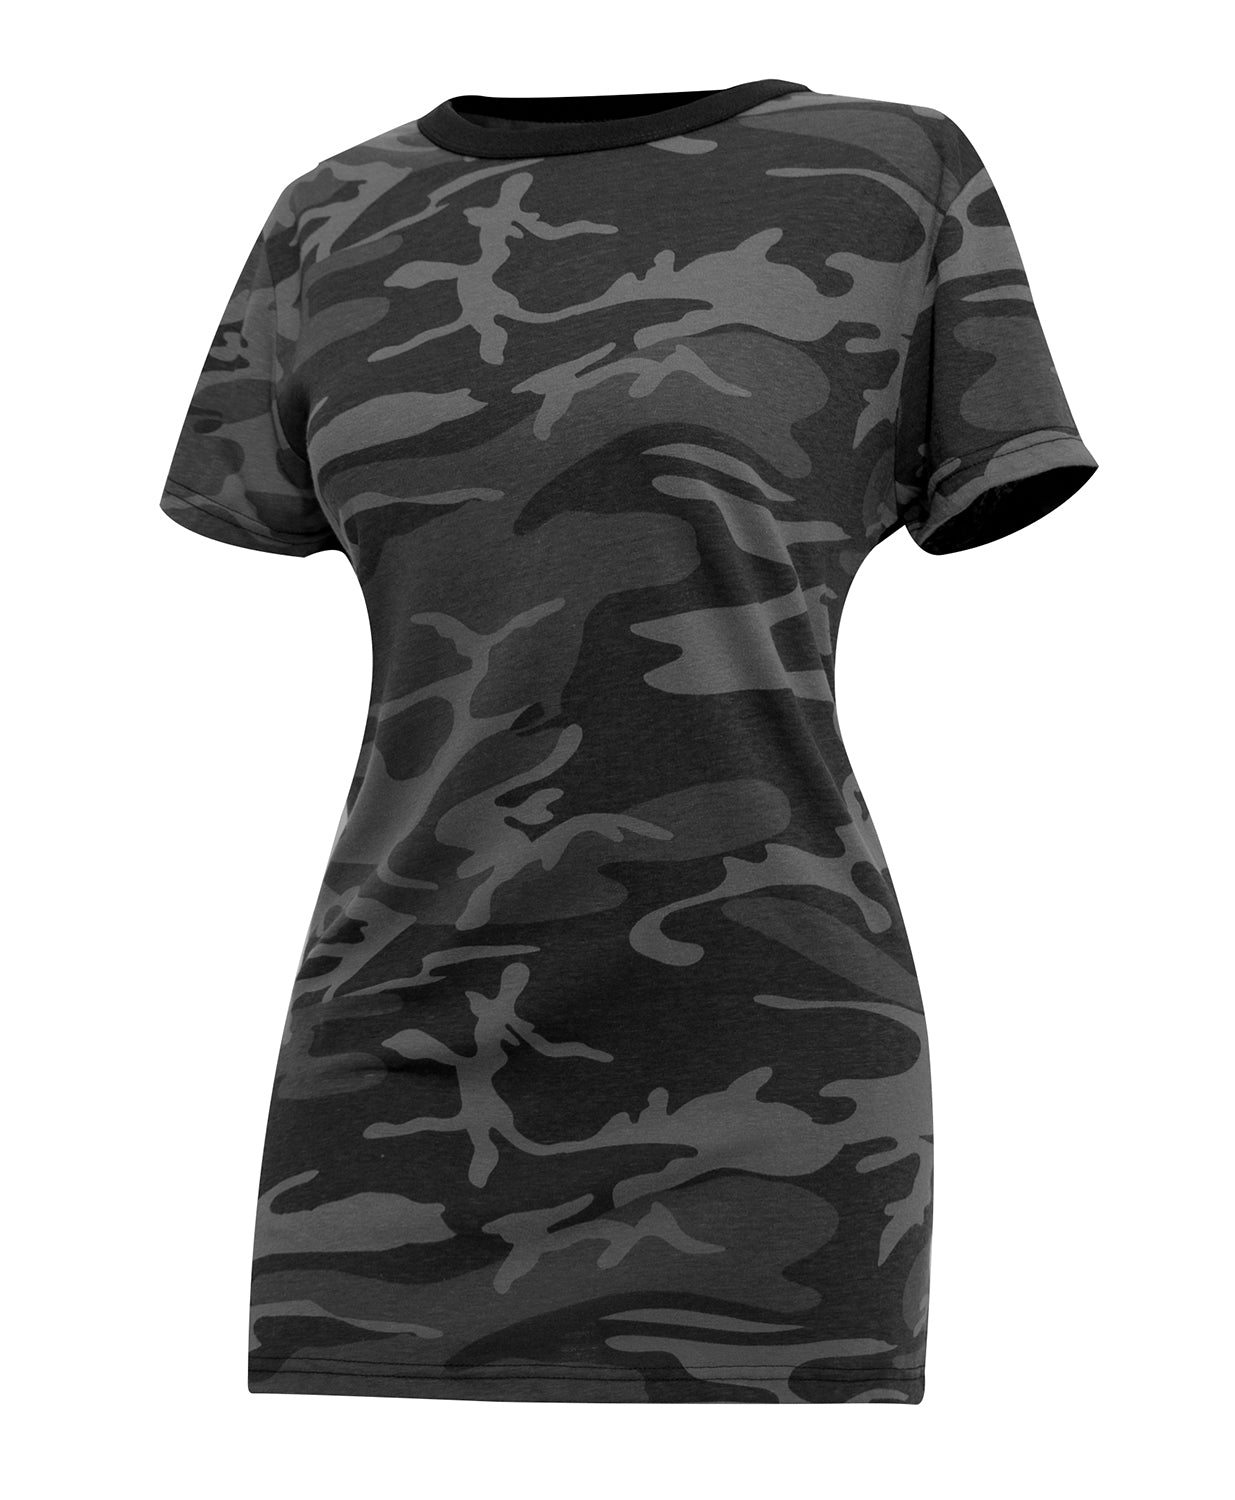 Milspec Womens Long Length Camo T-Shirt Camo T-Shirts MilTac Tactical Military Outdoor Gear Australia